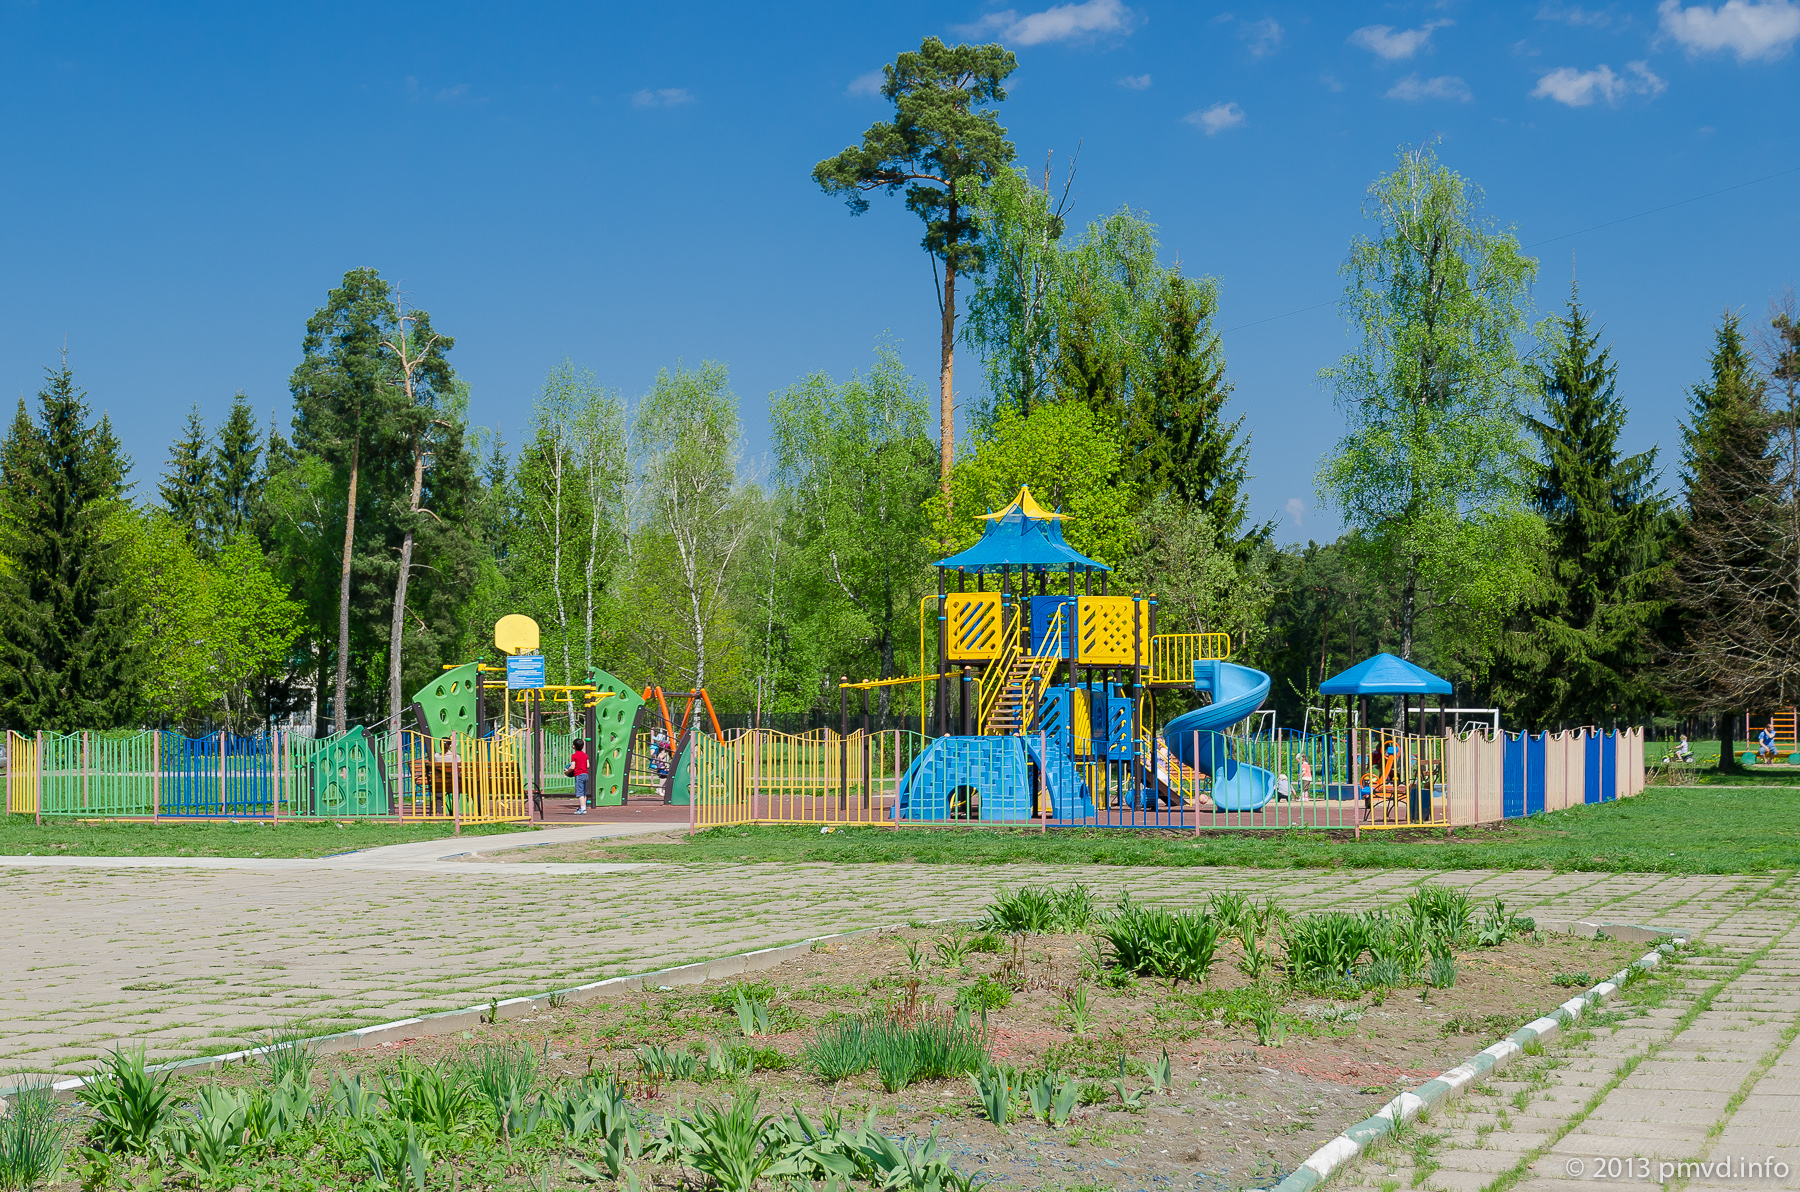 A children playground in Yakovlevksoye village.